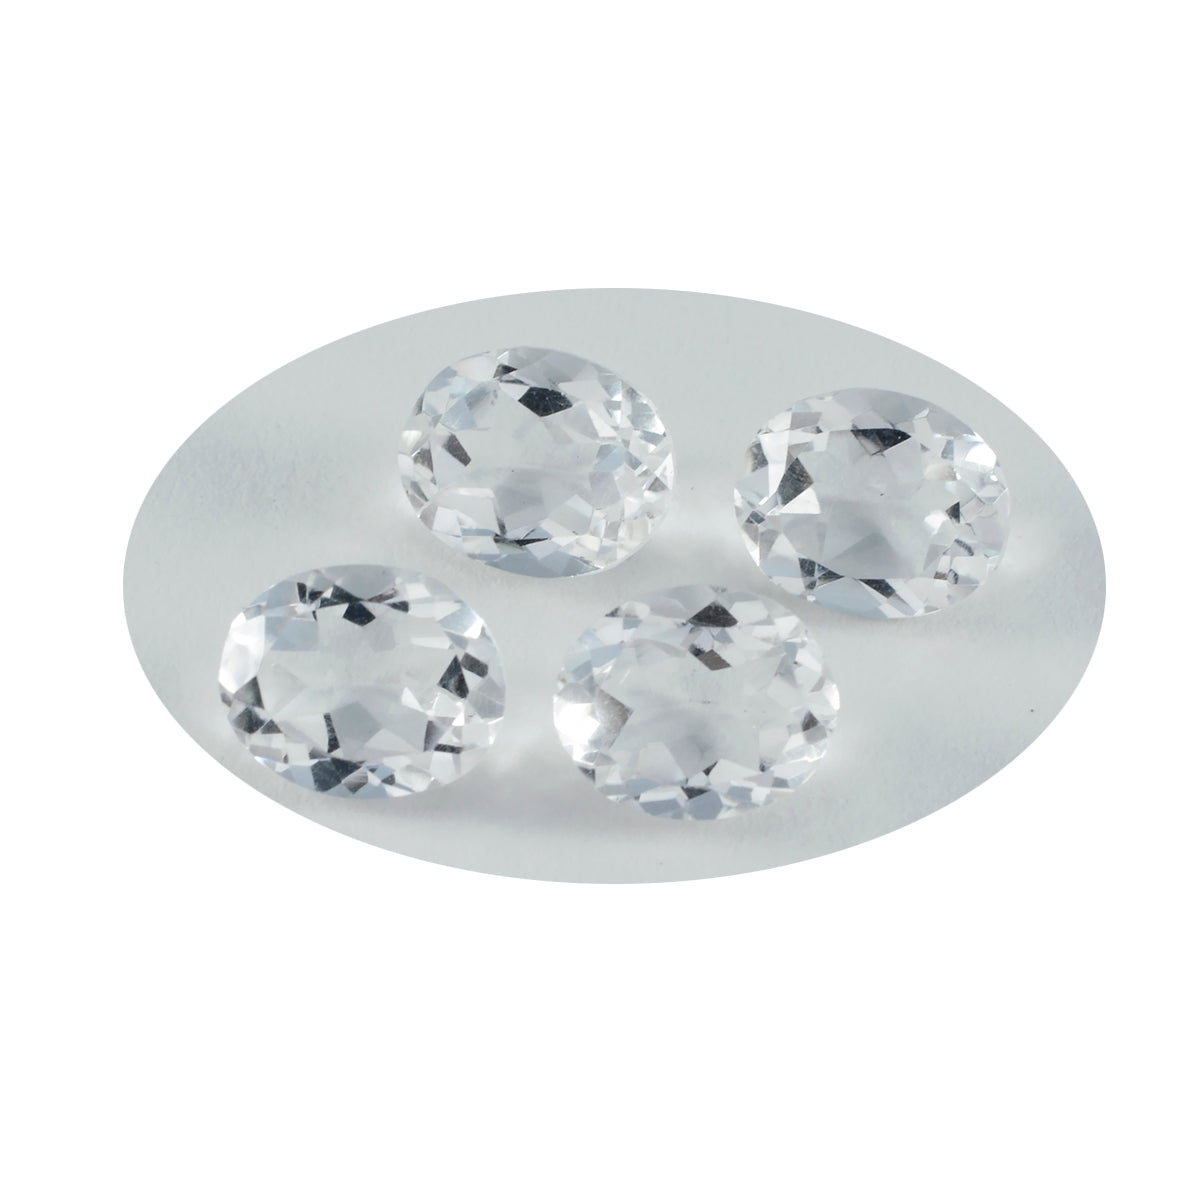 Riyogems 1PC wit kristalkwarts gefacetteerd 7x9 mm ovale vorm, mooie kwaliteitssteen